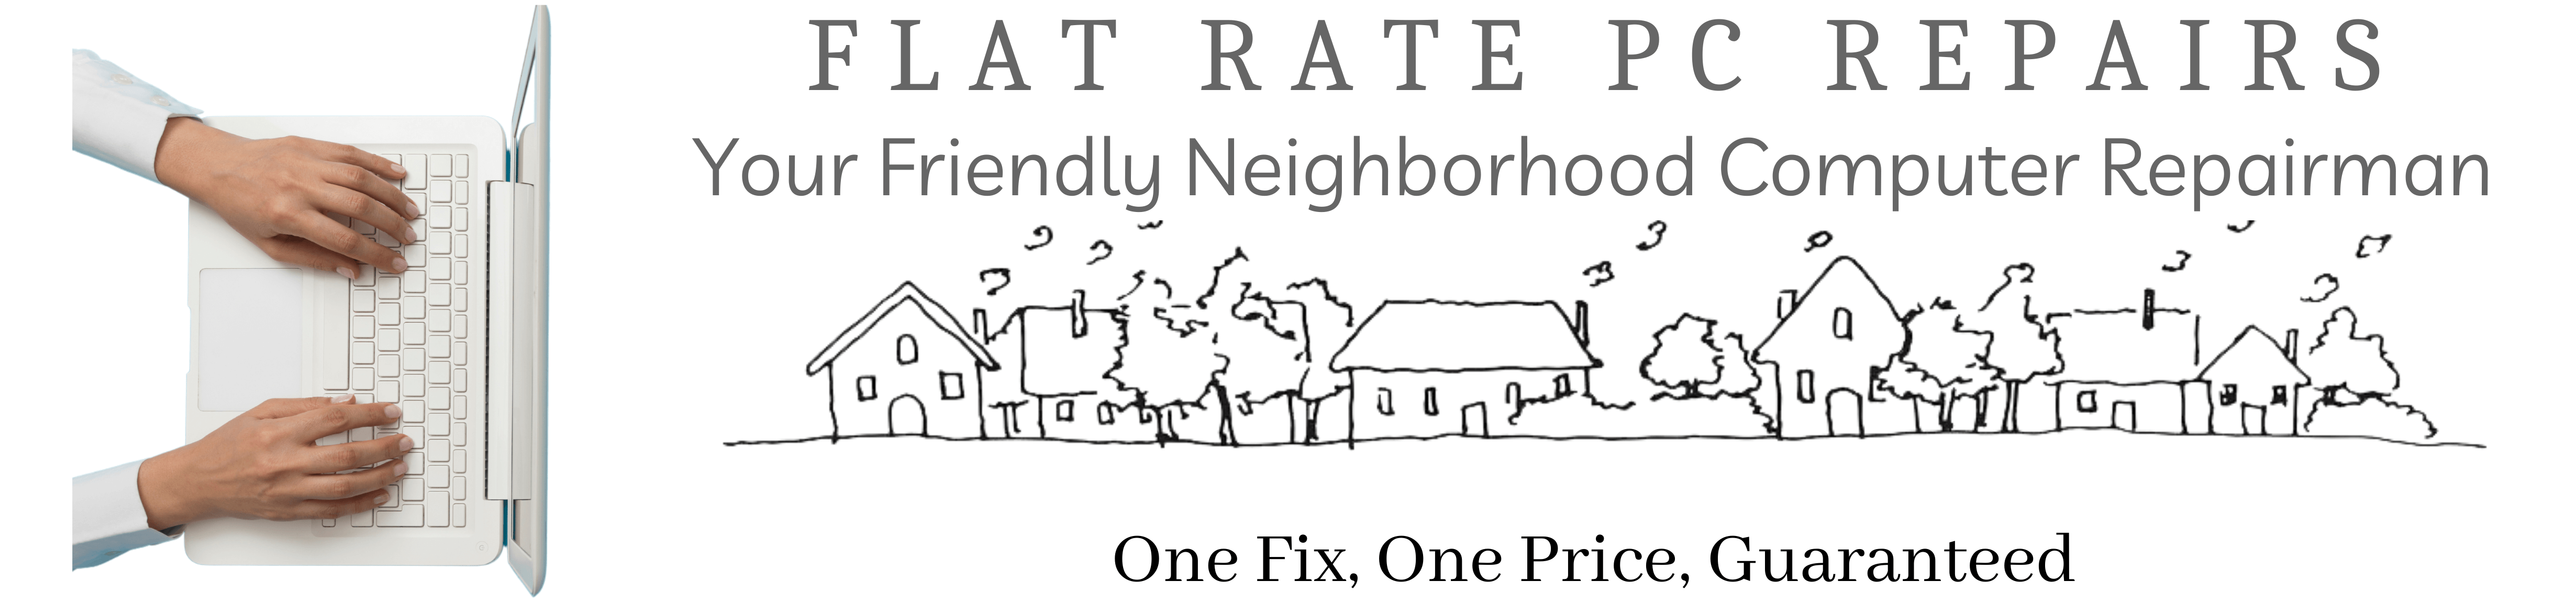 Flat Rate Pc Repairs of Gloucester County, NJ